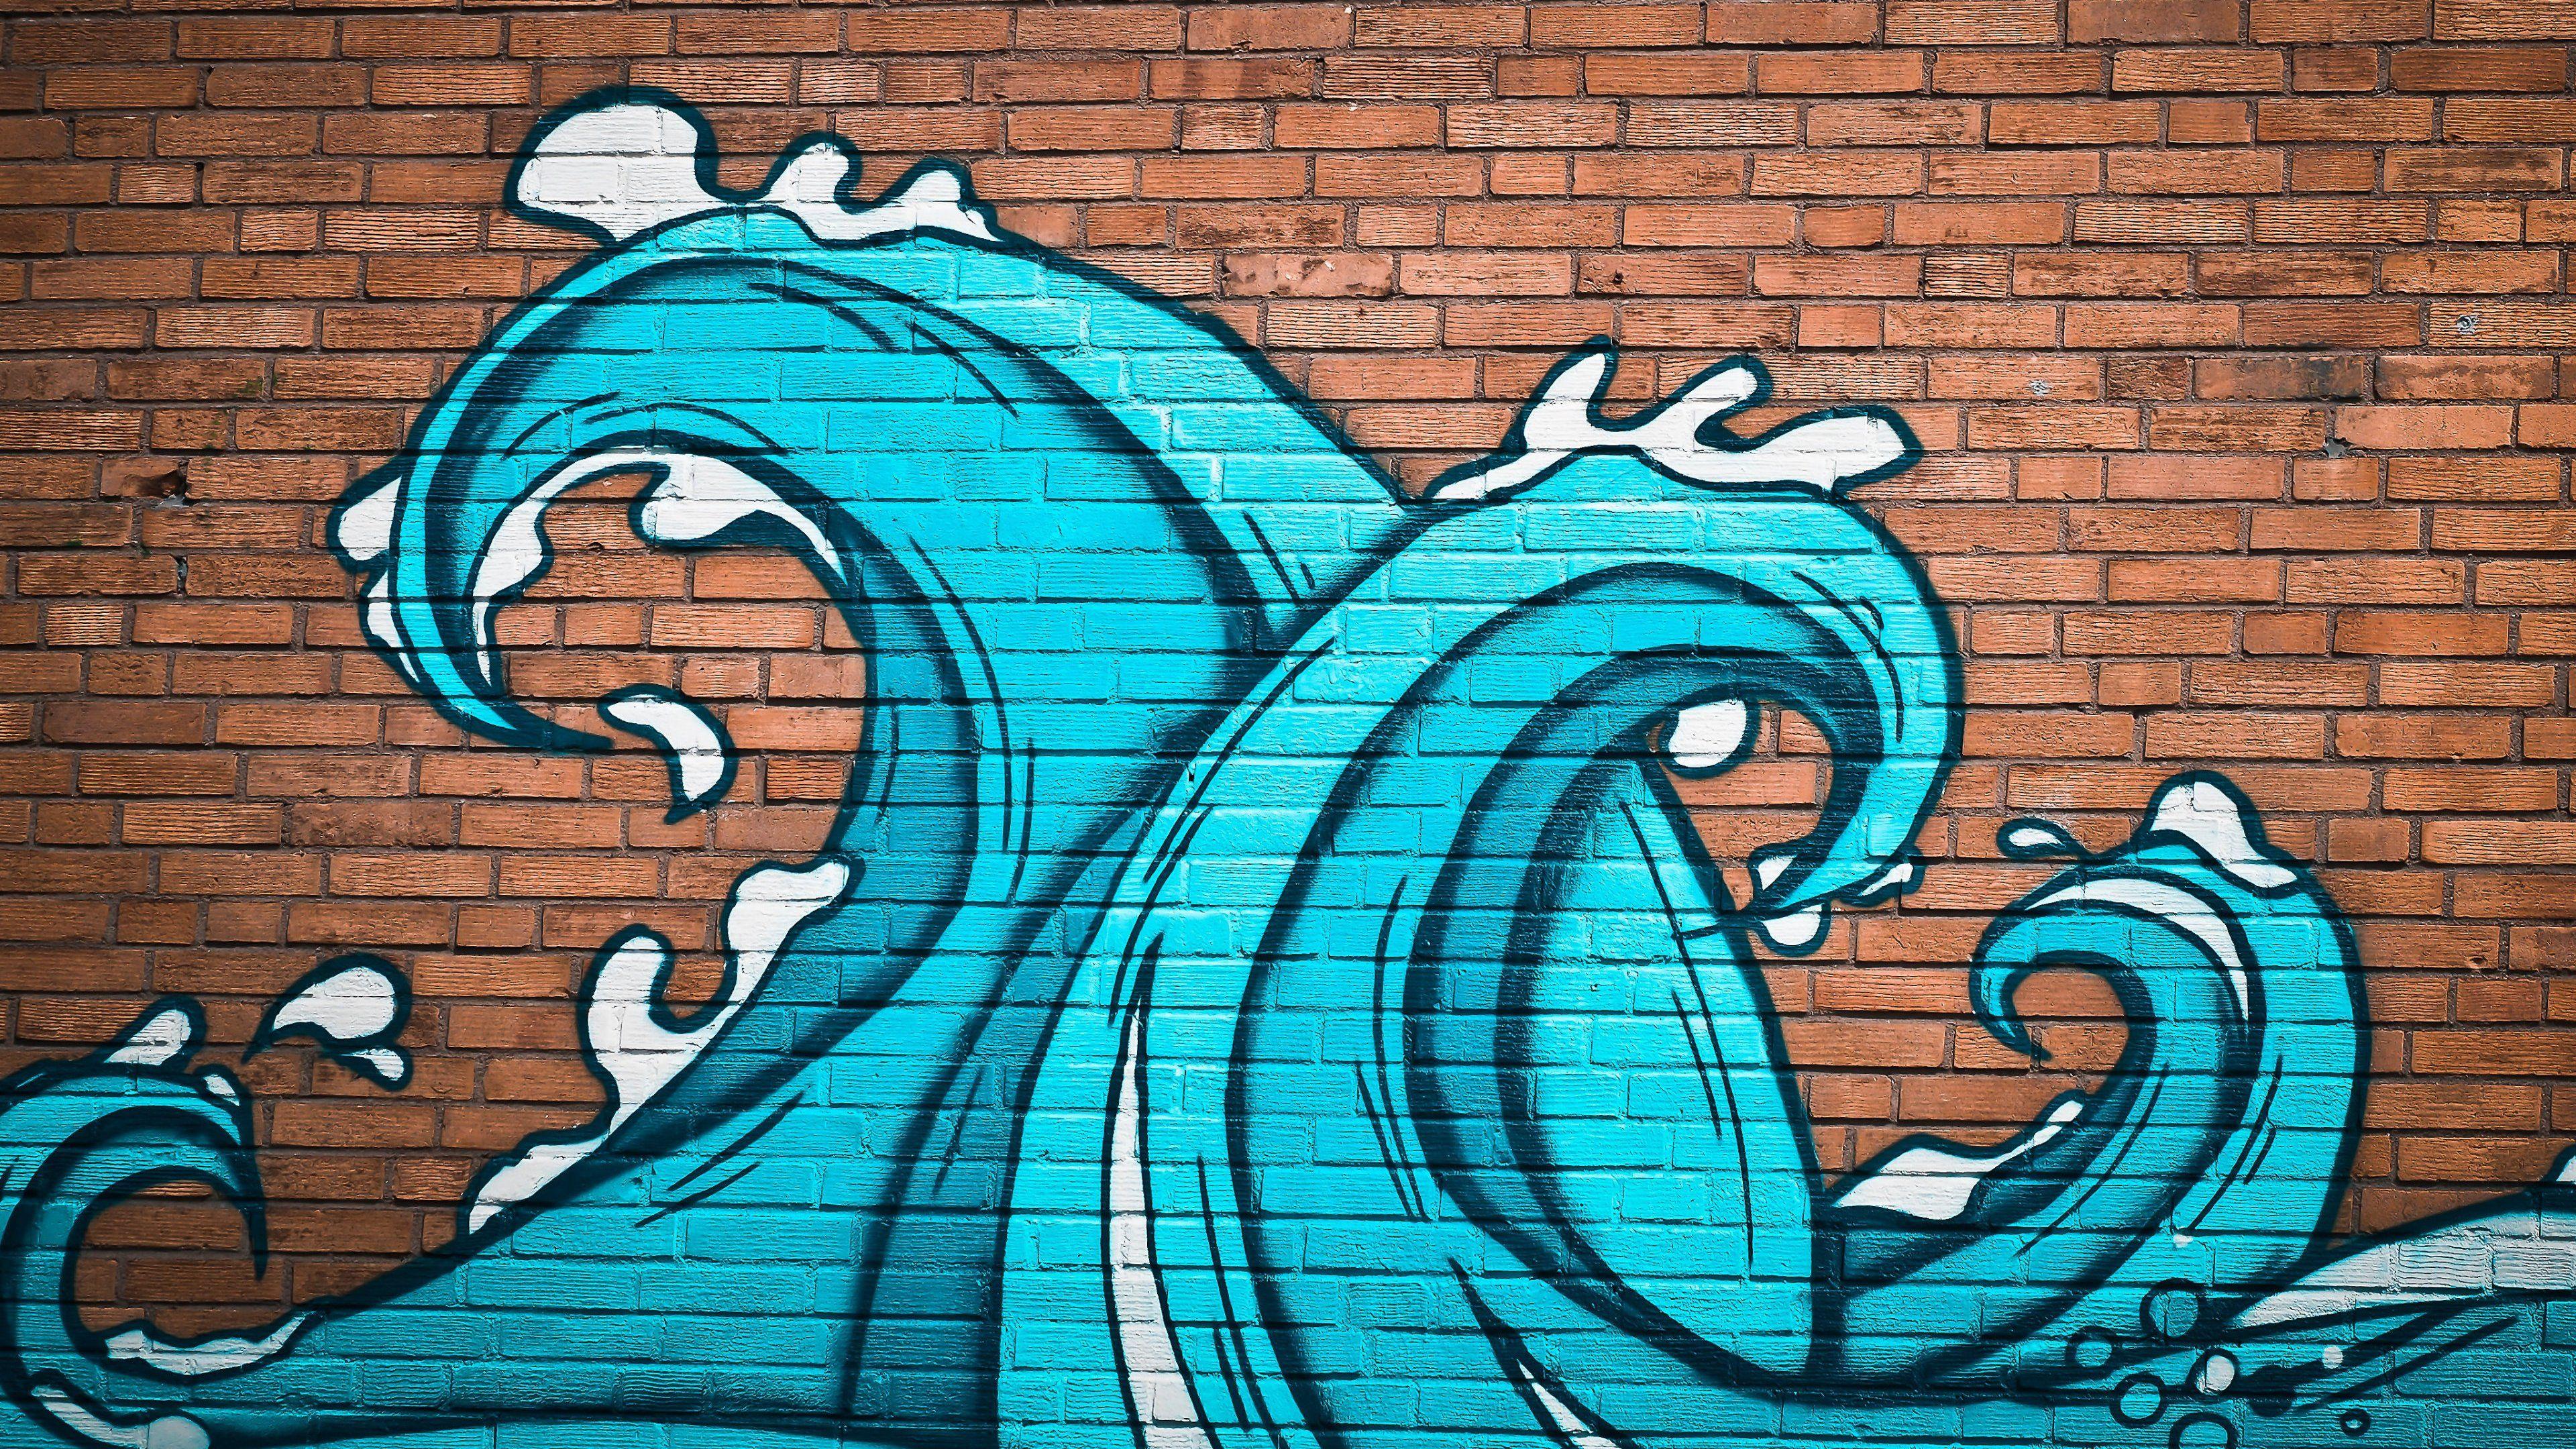 Ocean Waves Street Art Wallpaper, Android & Desktop